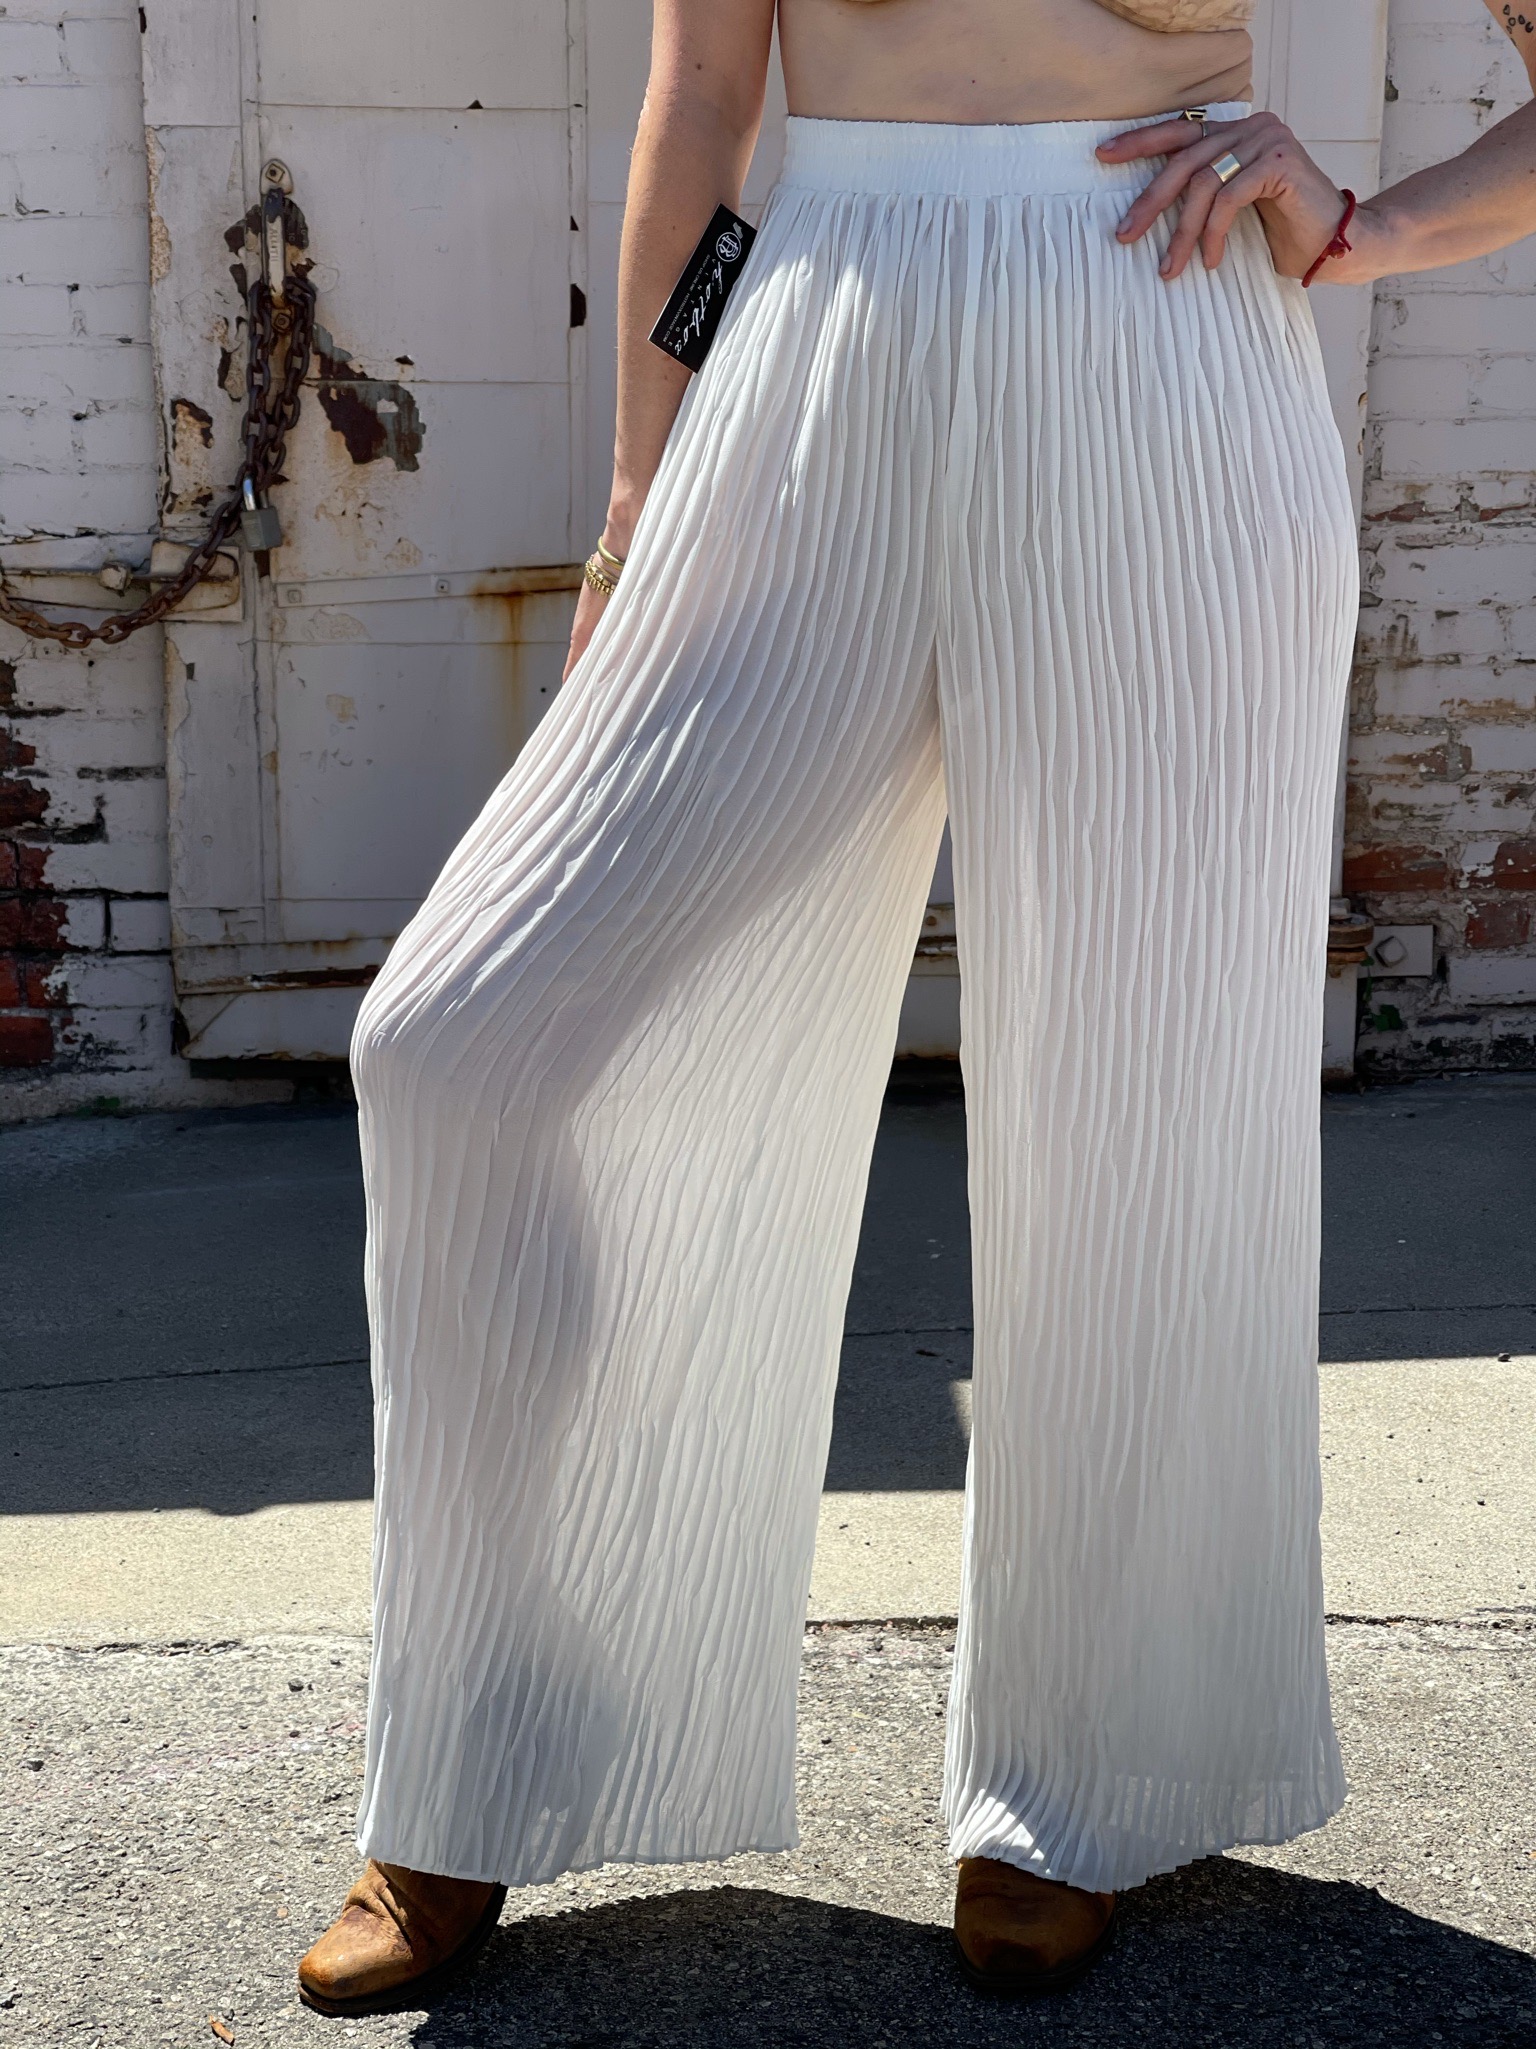 Vintage Sheer White Pleated Chiffon Pants - S/M